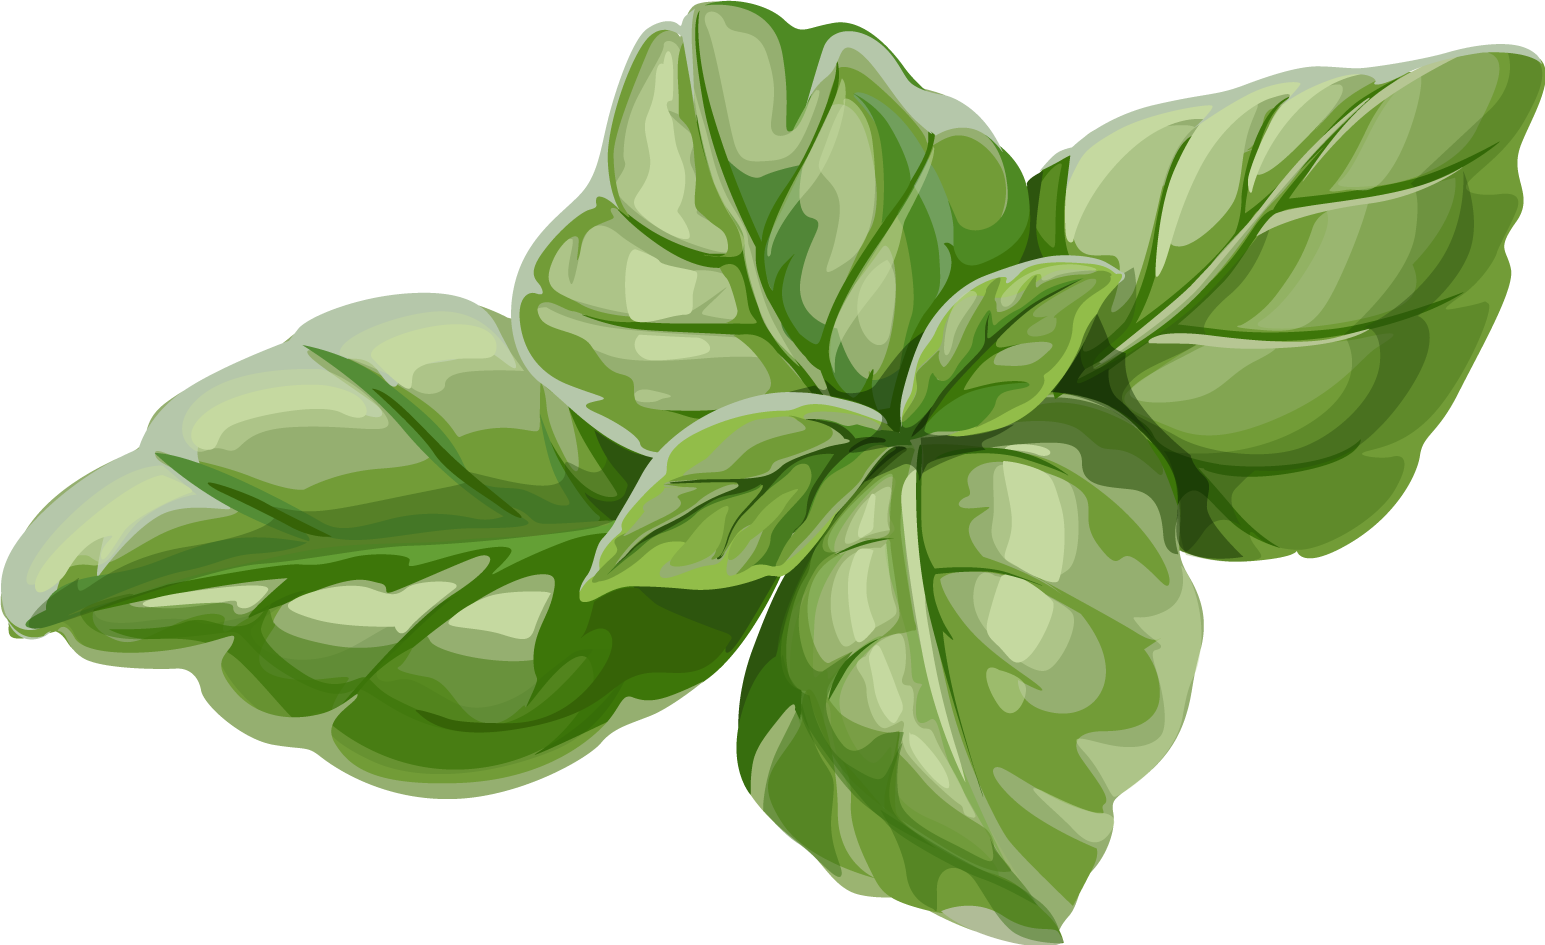 Fresh Basil Leaves Illustration